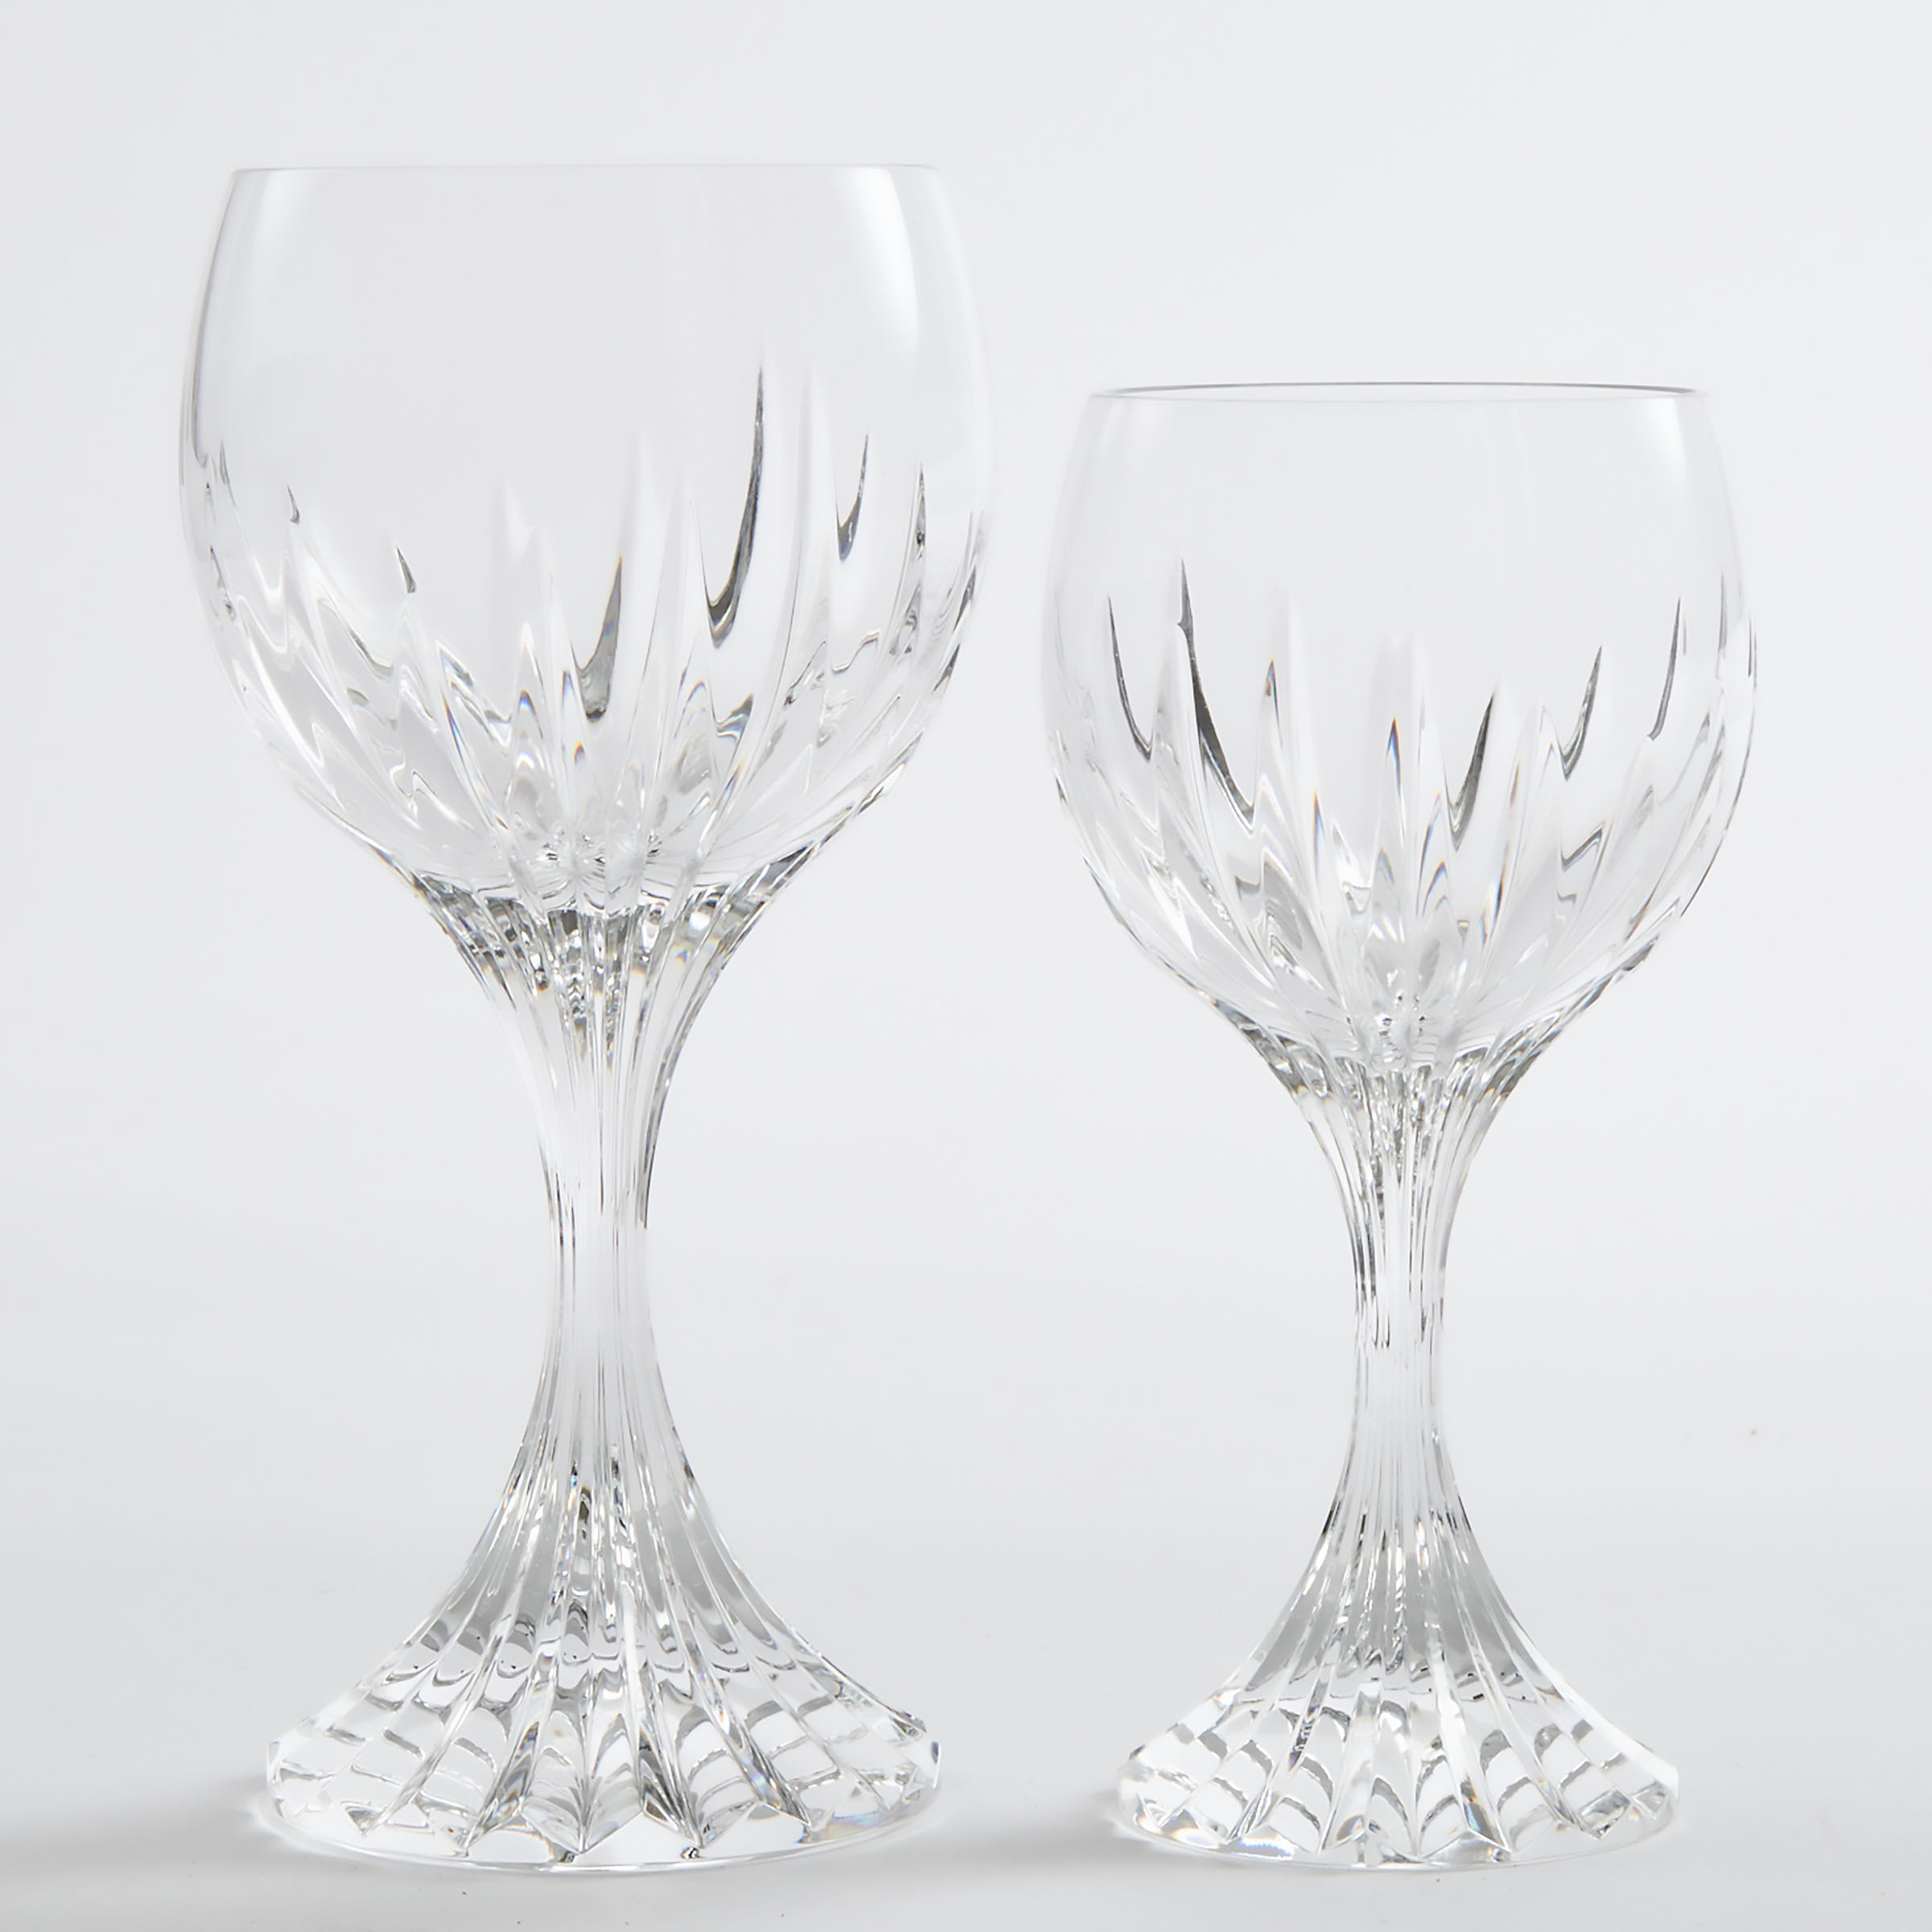 Twelve Baccarat 'Massena' Cut Glass Red Wines and Twelve White Wine Glasses, 20th century